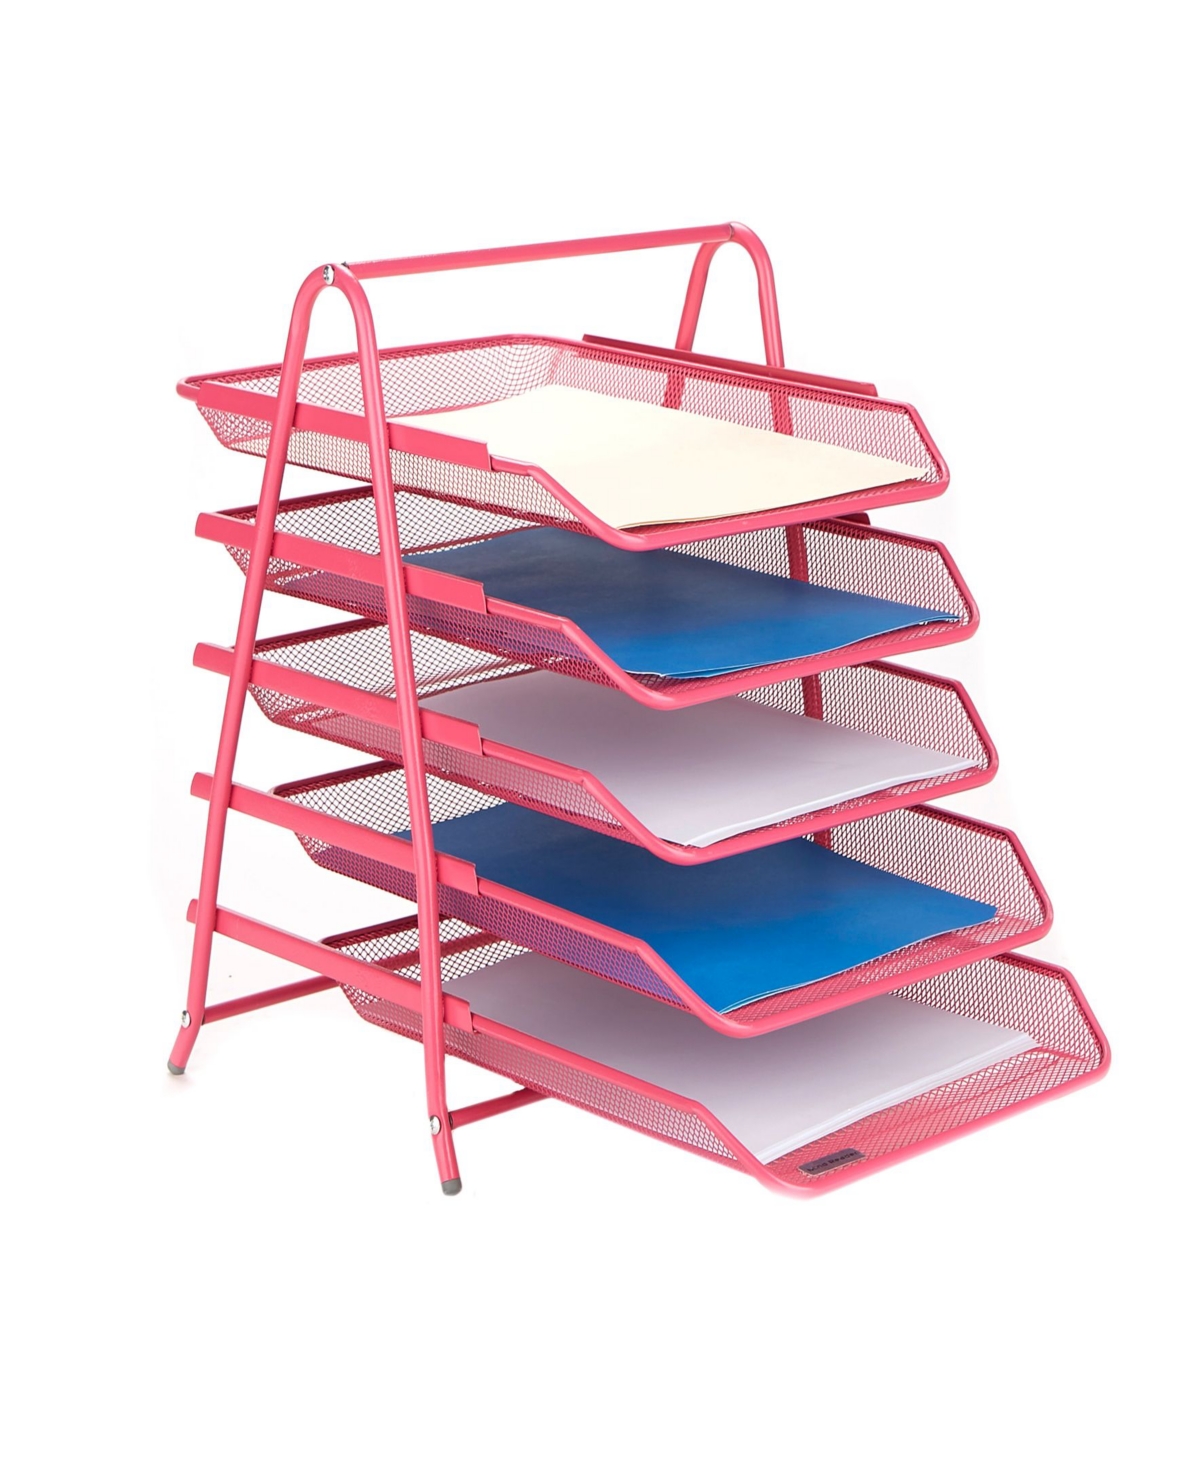 5 Tier Paper Tray Desk Organizer - Pink